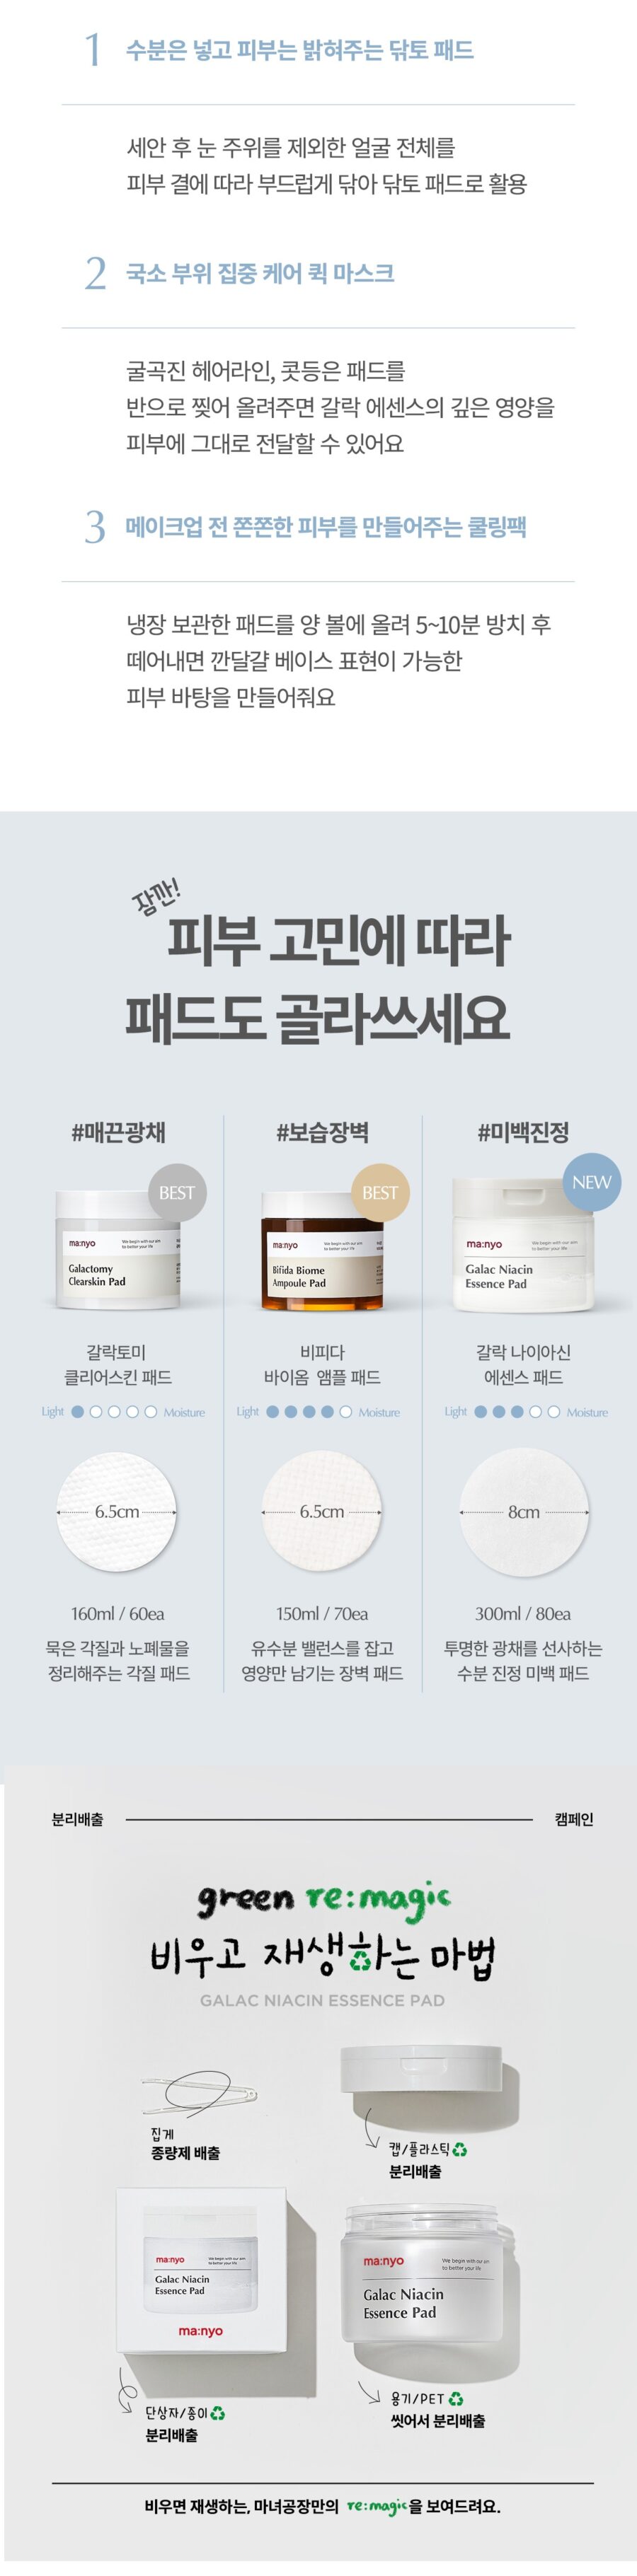 Manyo Factory Galac Niacin Essence Pad korean skincare product online shop malaysia macau poland5